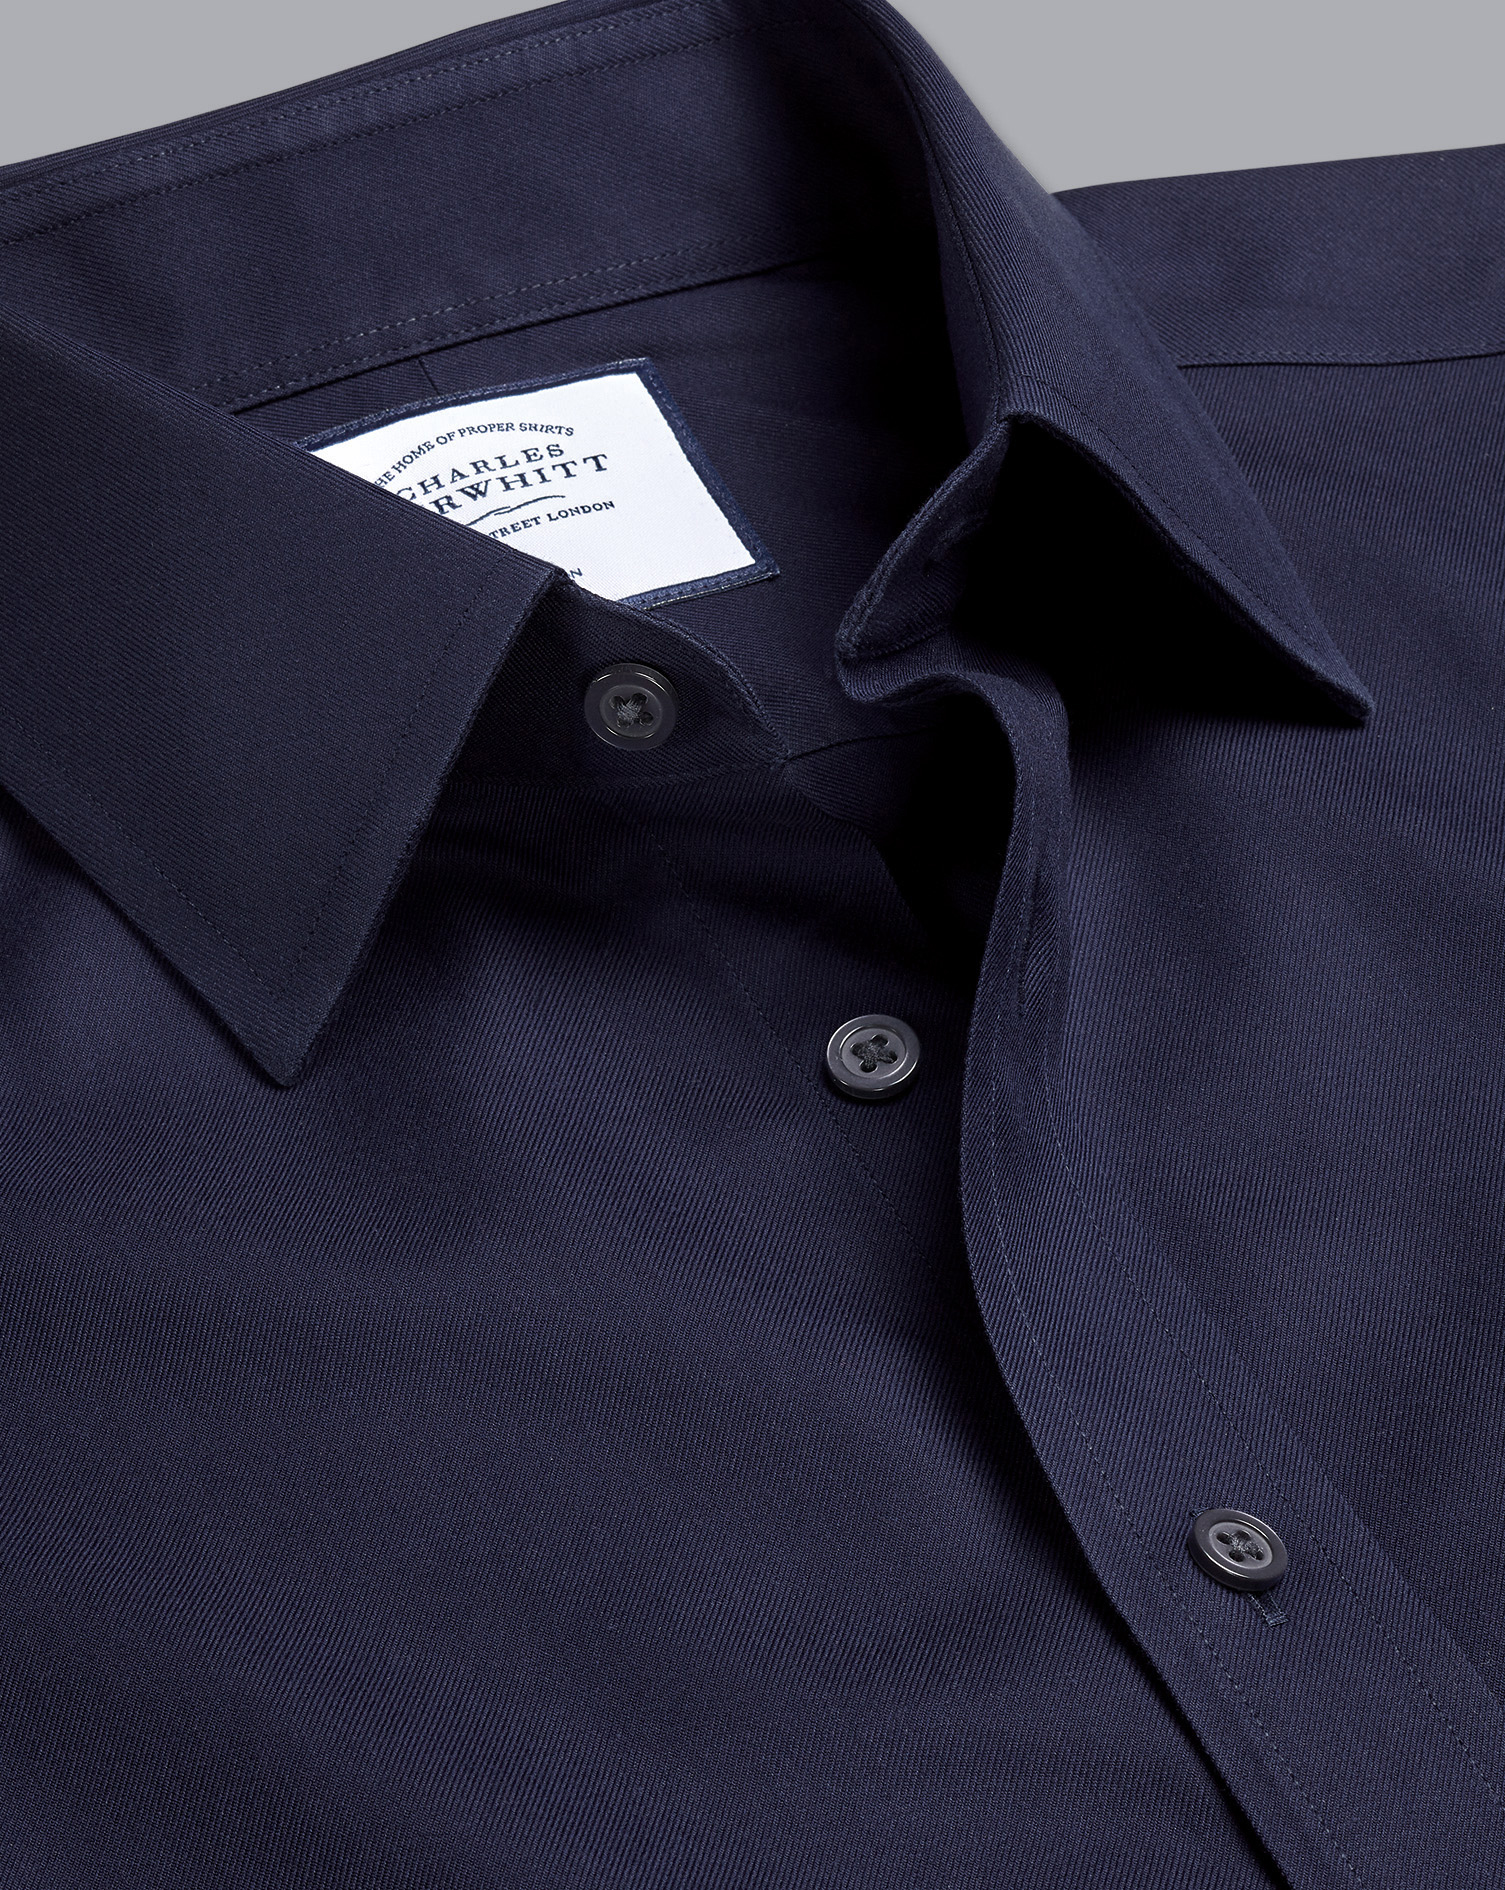 Men's Charles Tyrwhitt Non-Iron Twill Dress Shirt - Navy French Cuff Blue Size XL Cotton
